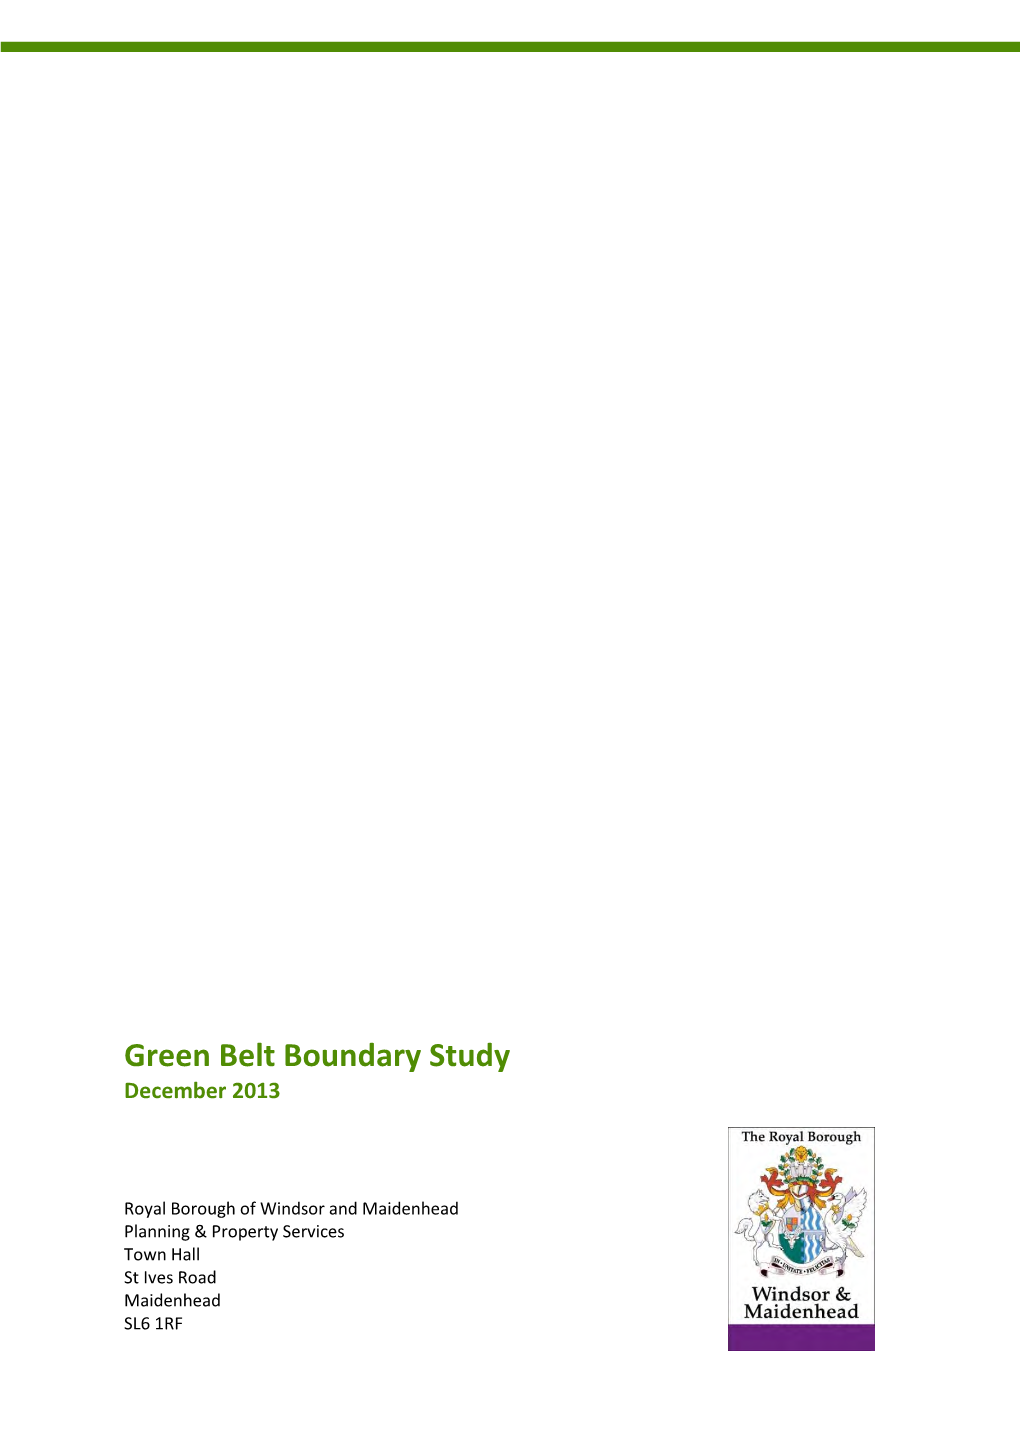 Green Belt Boundary Study 2013 Contents